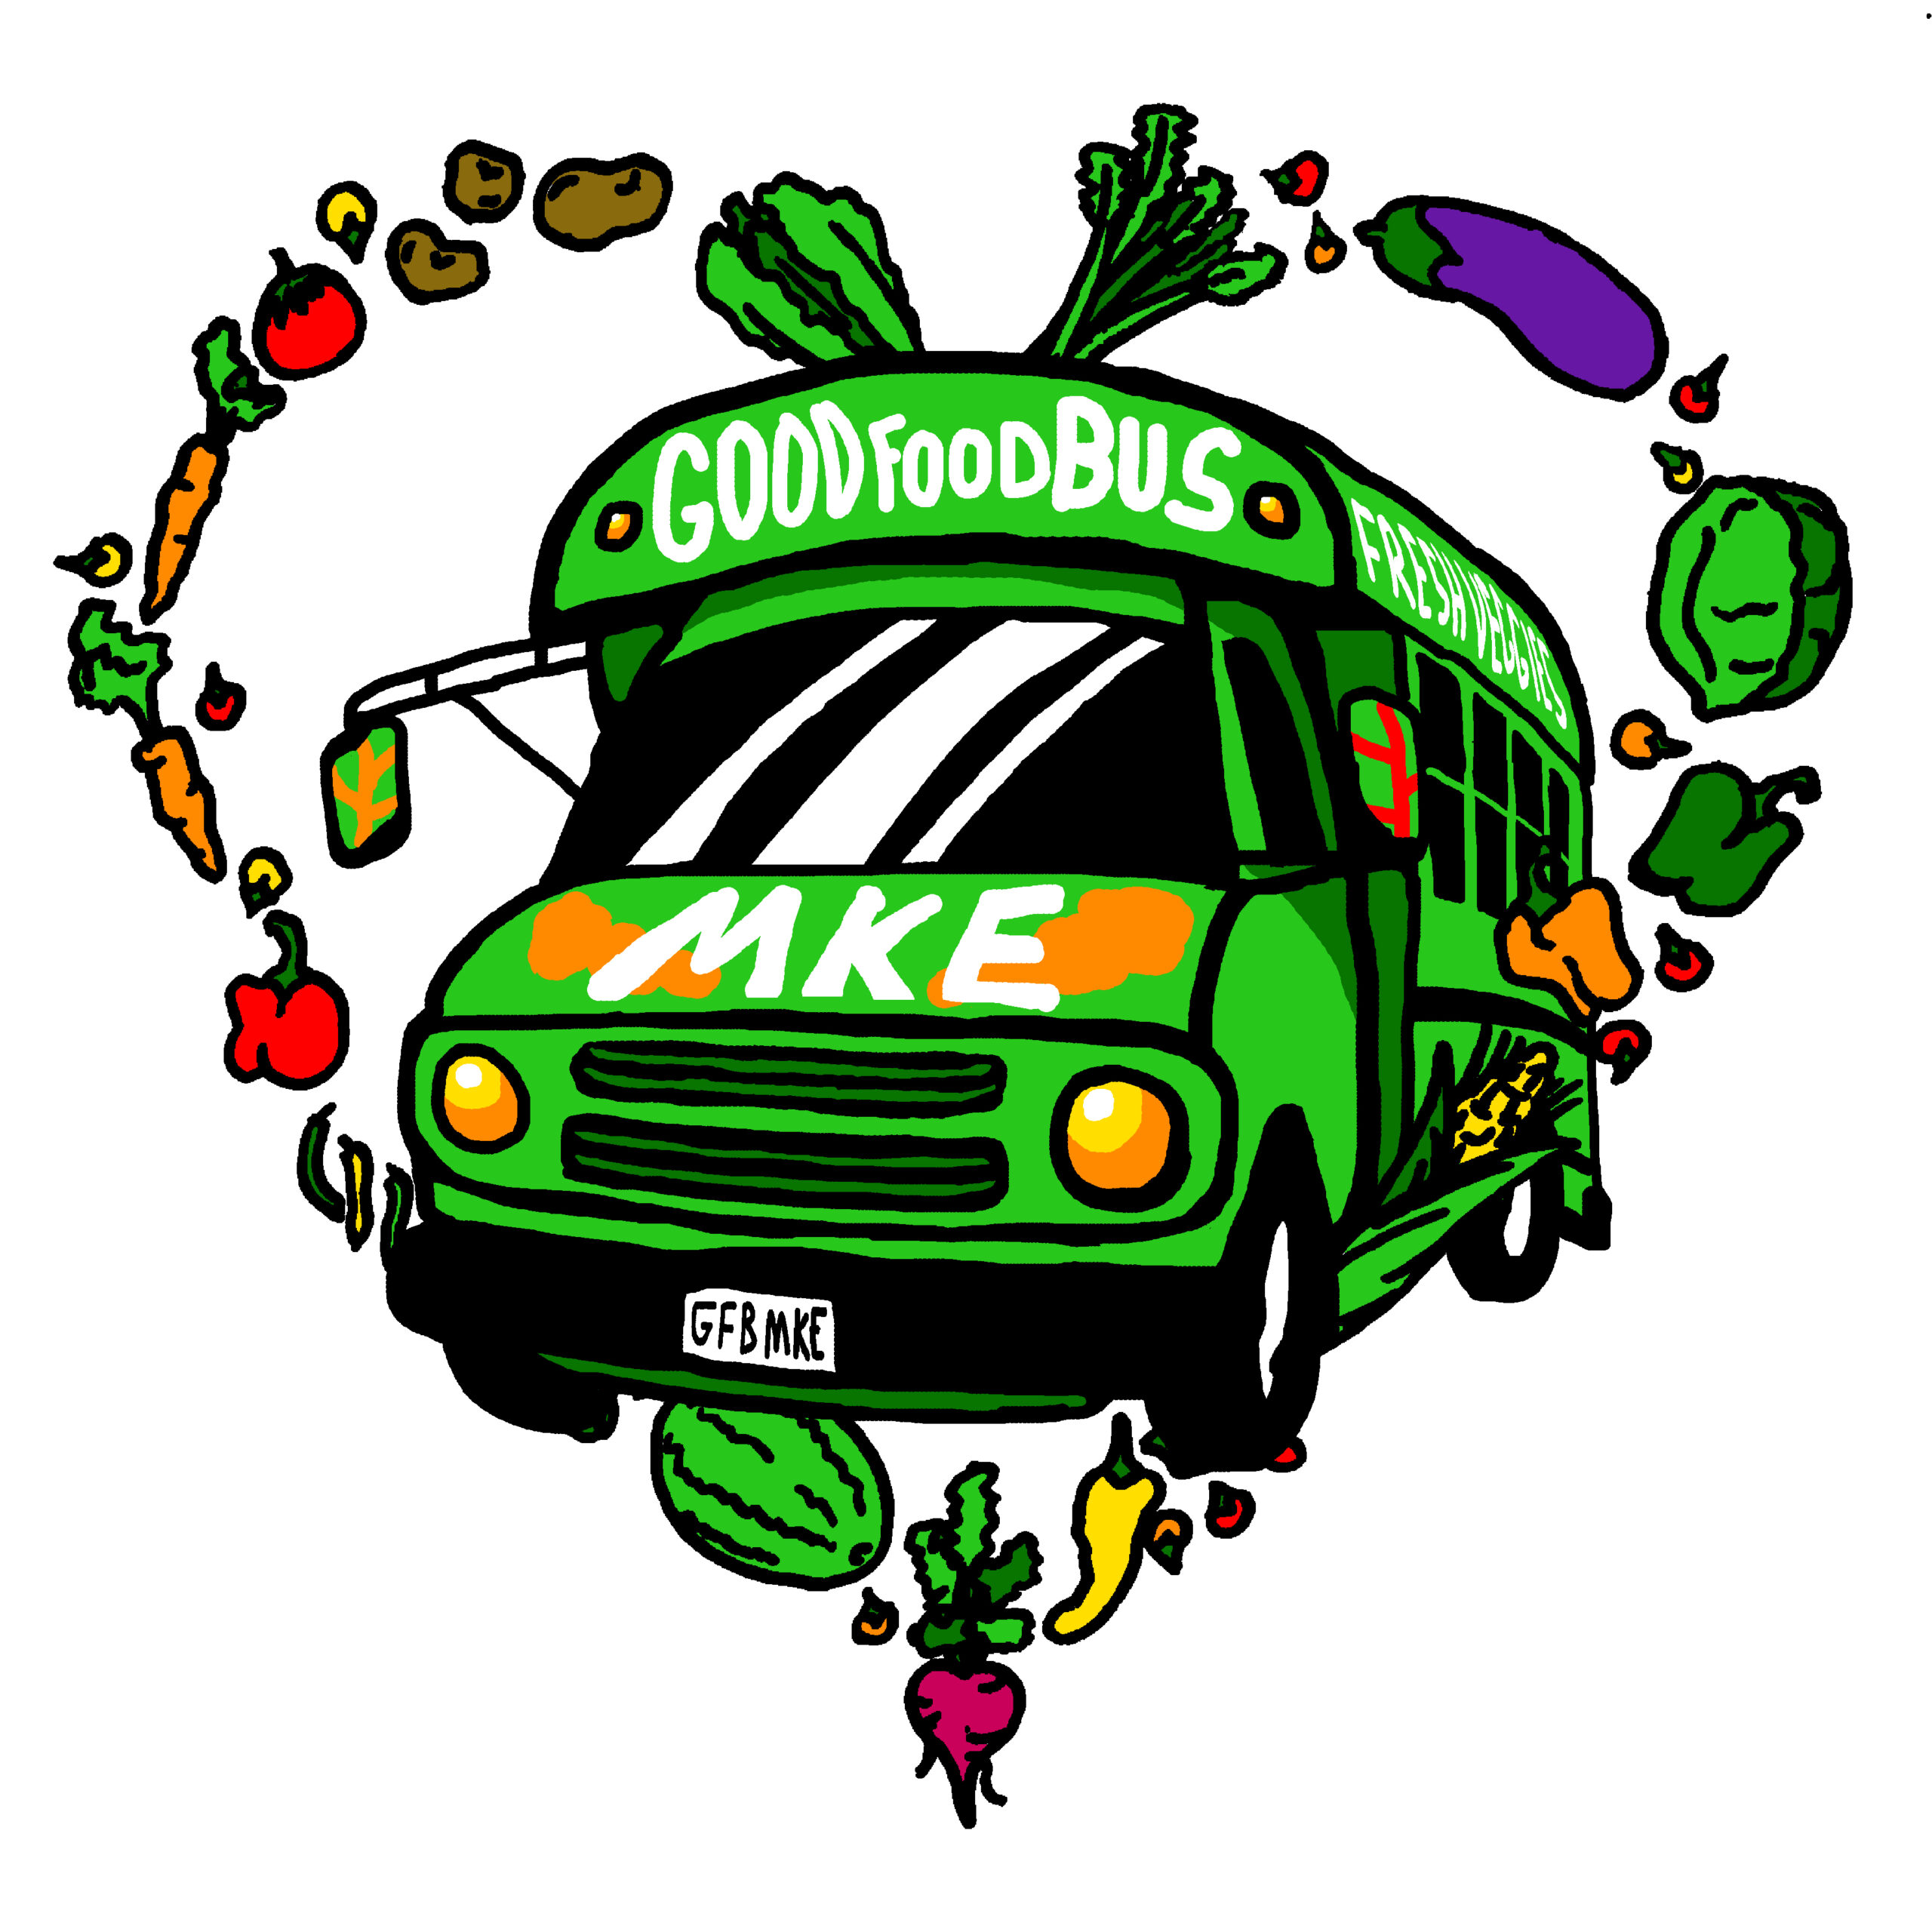 MKE Good Food Bus